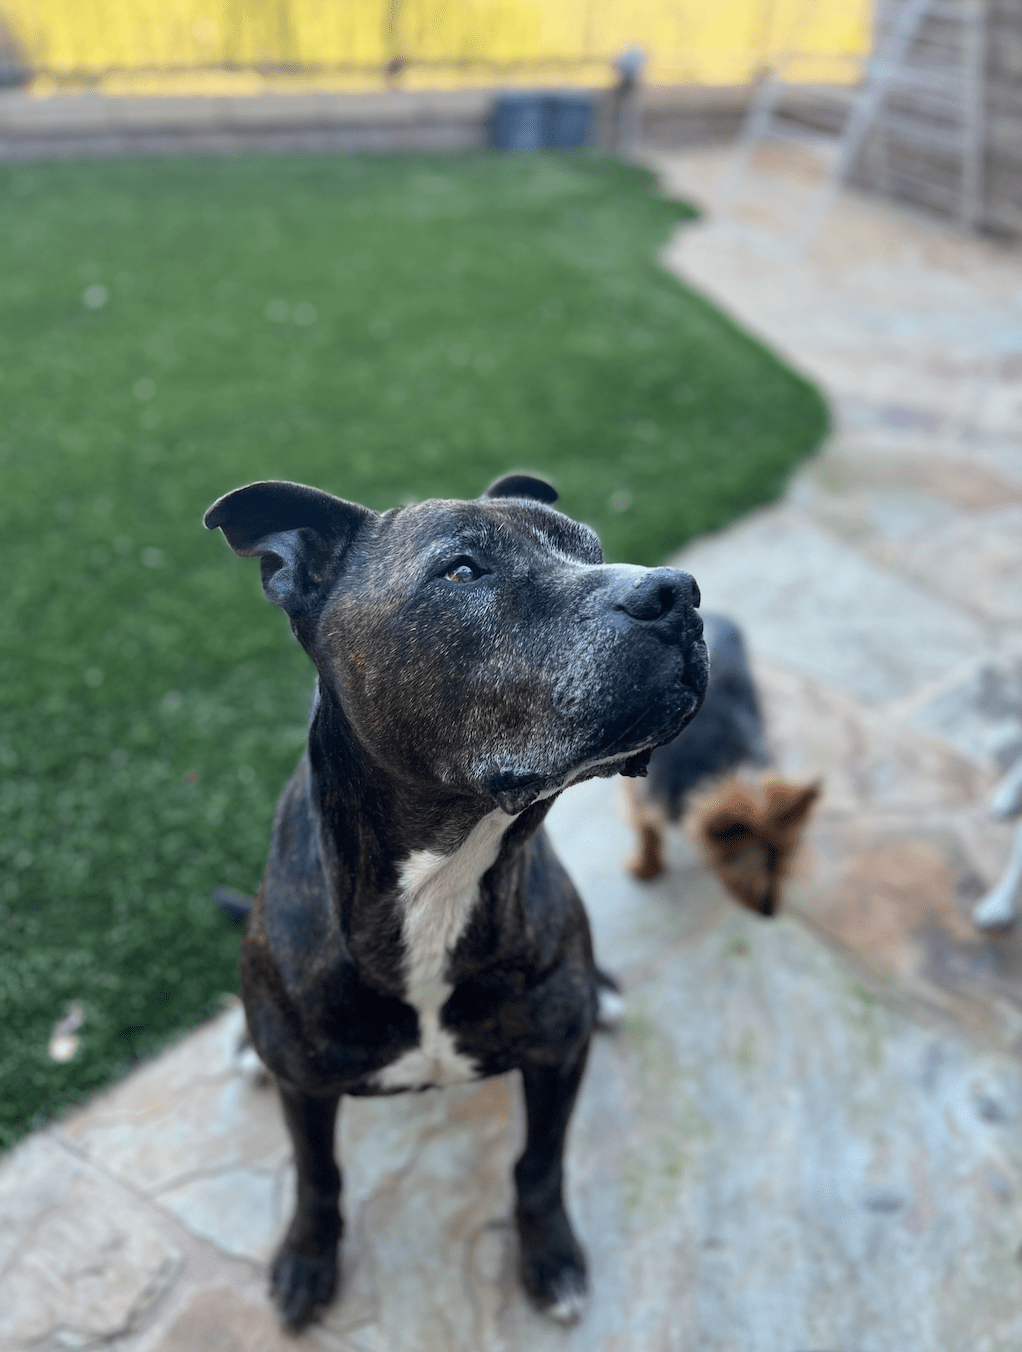 Baxter, a senior dog, sitting on the grass